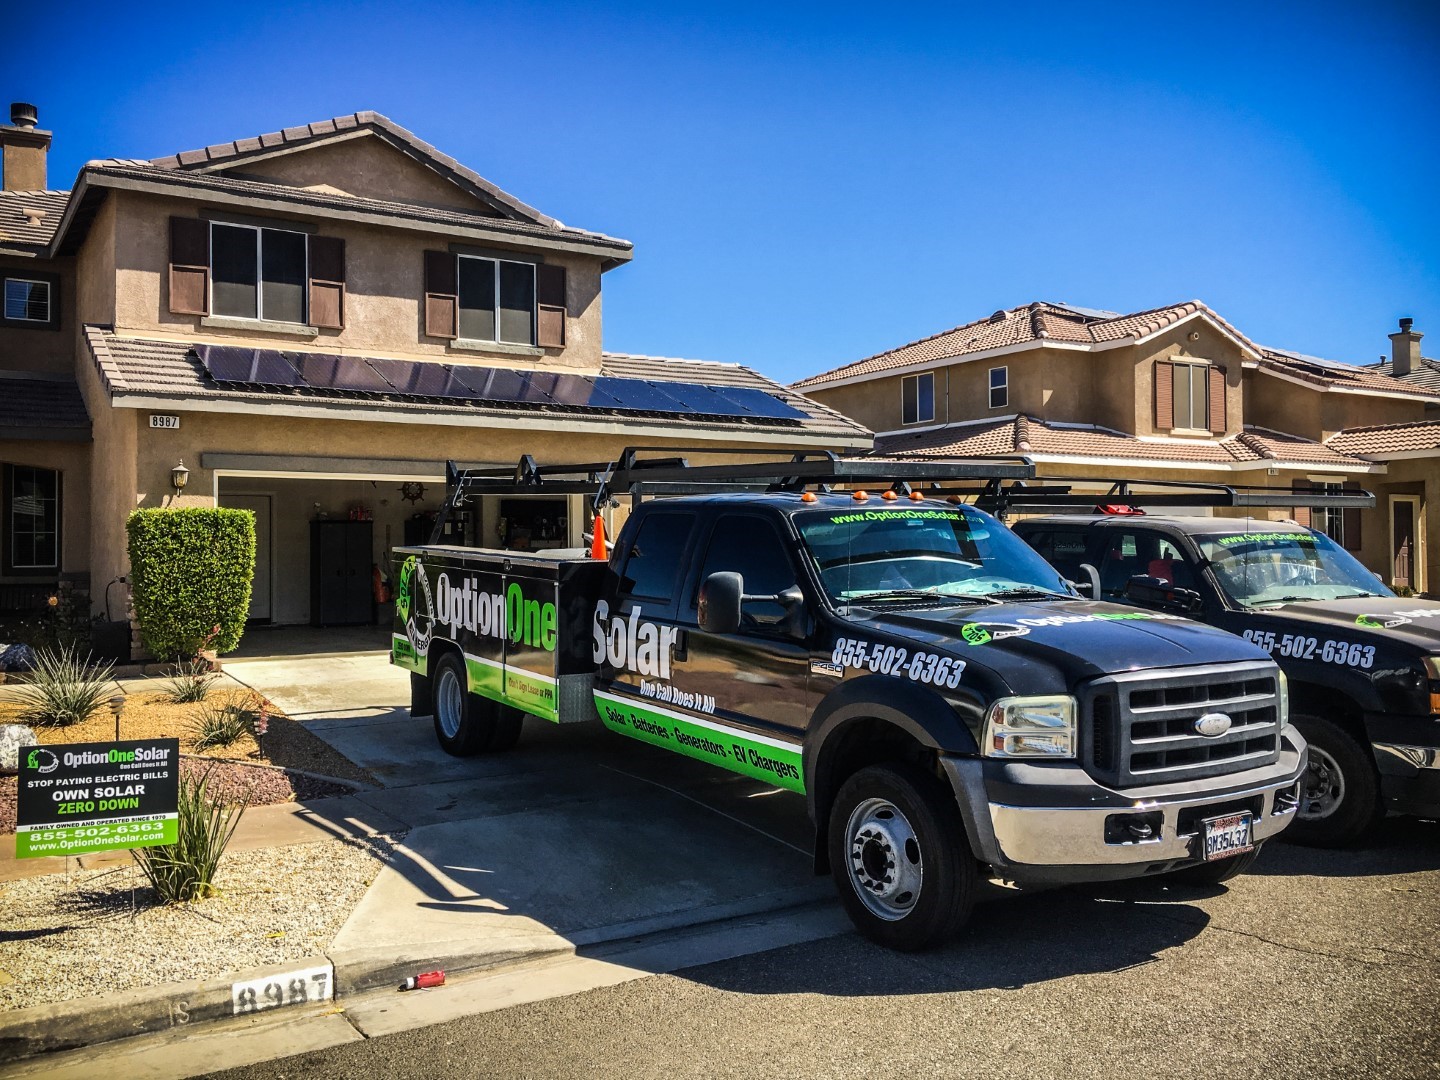 Apple Valley, CA: Report On Net Energy Metering Updates For Solar Panels In 2022